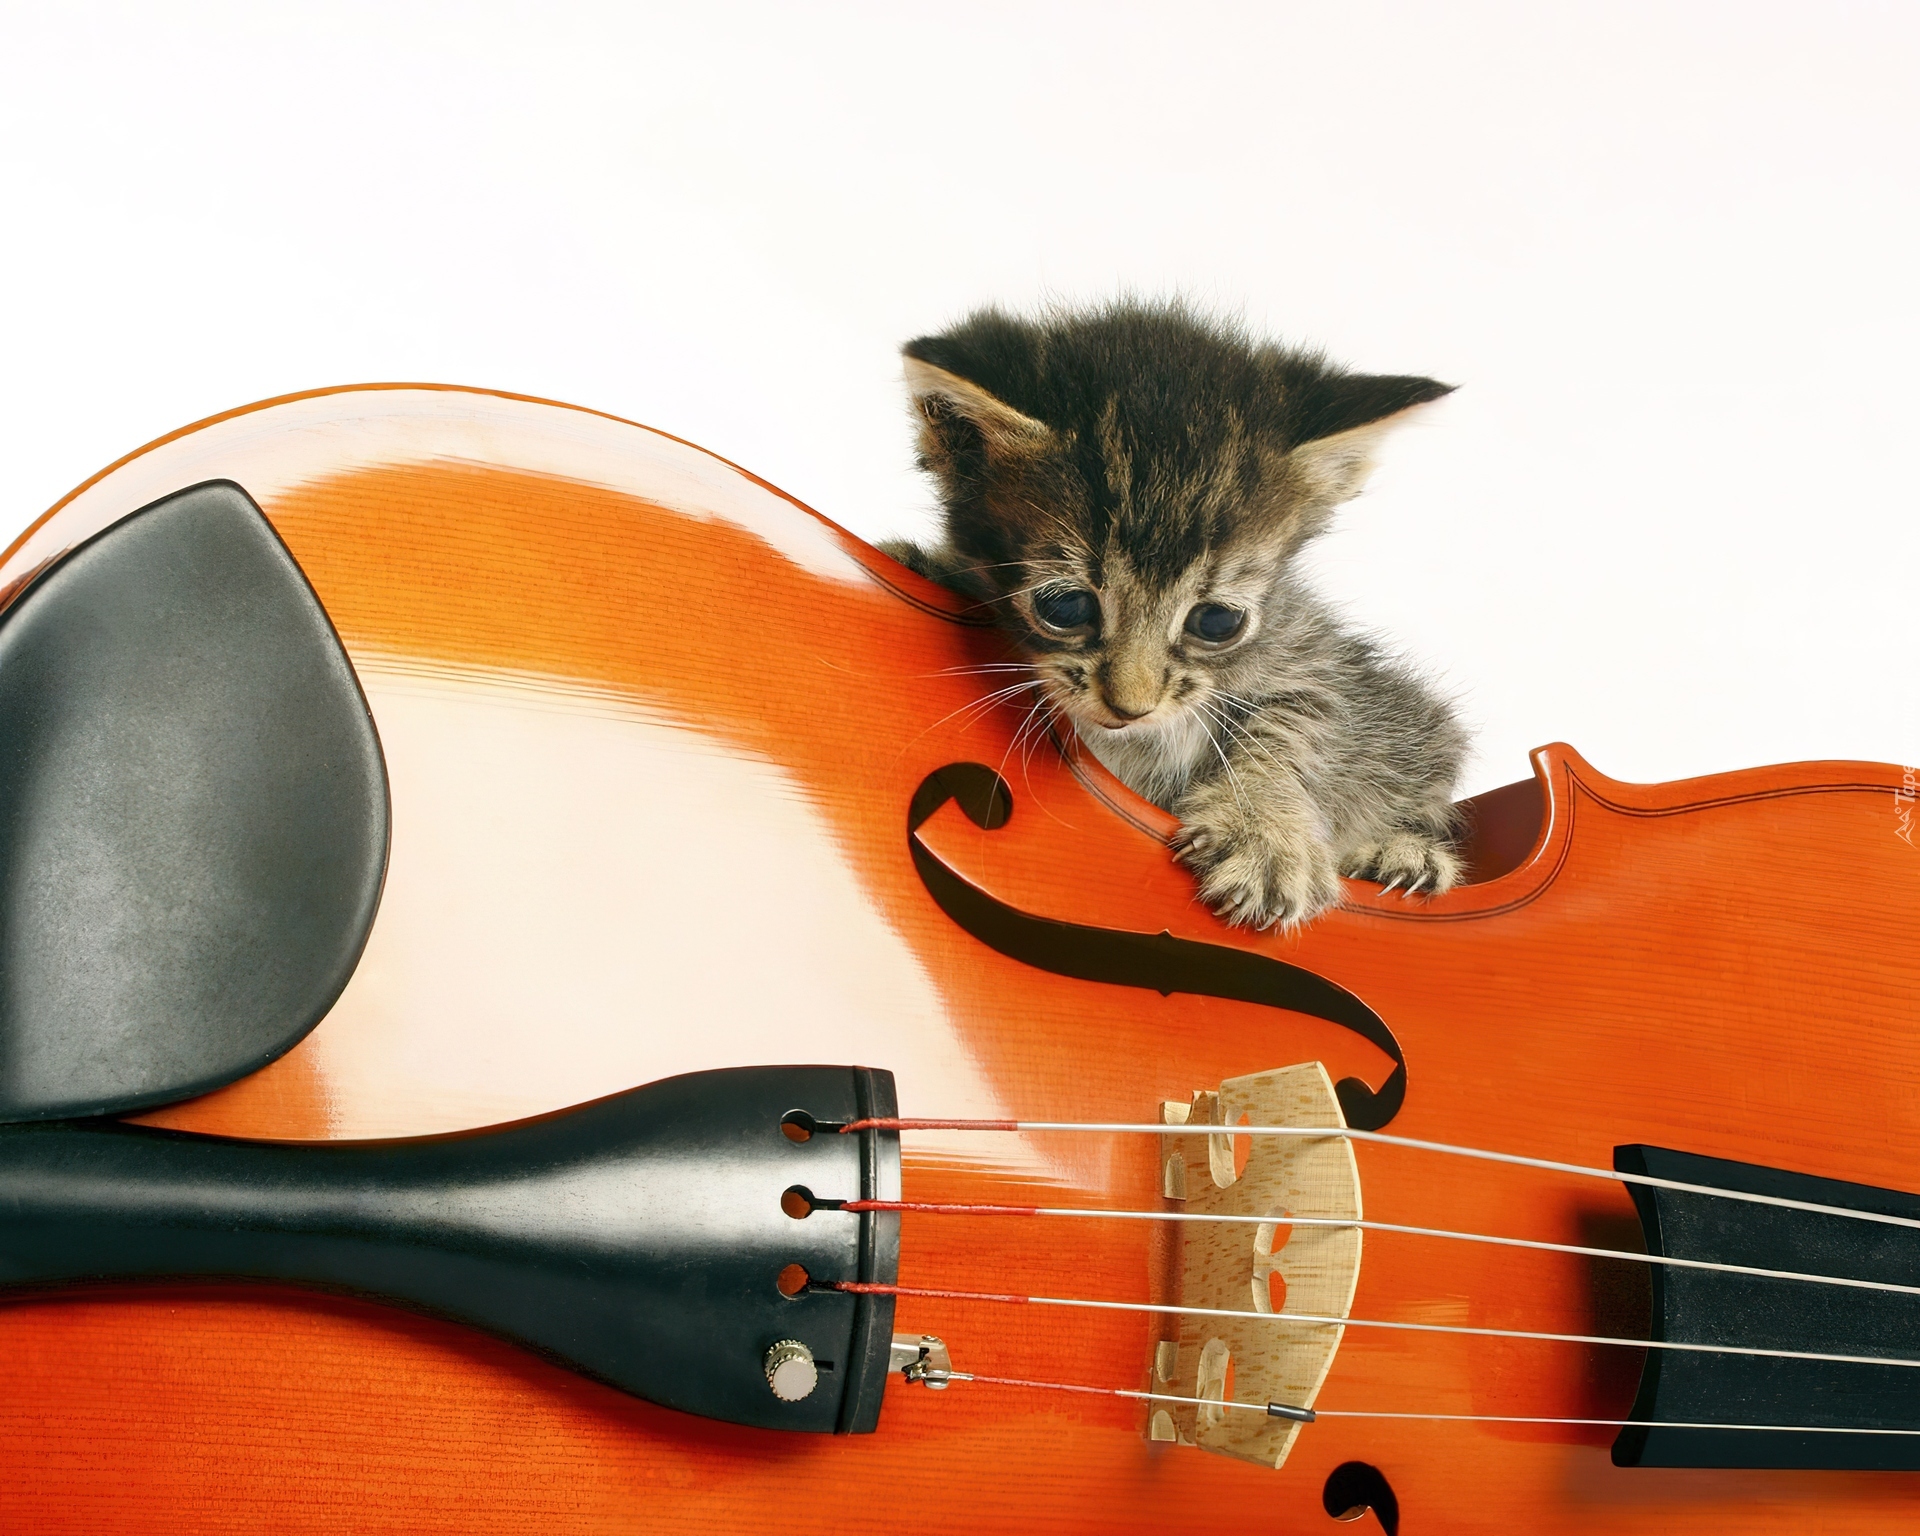 Музыка под кошку. Кошки с музыкальными инструментами. Кот с музыкальным инструментом. Котик с гитарой. Кошки музыканты.